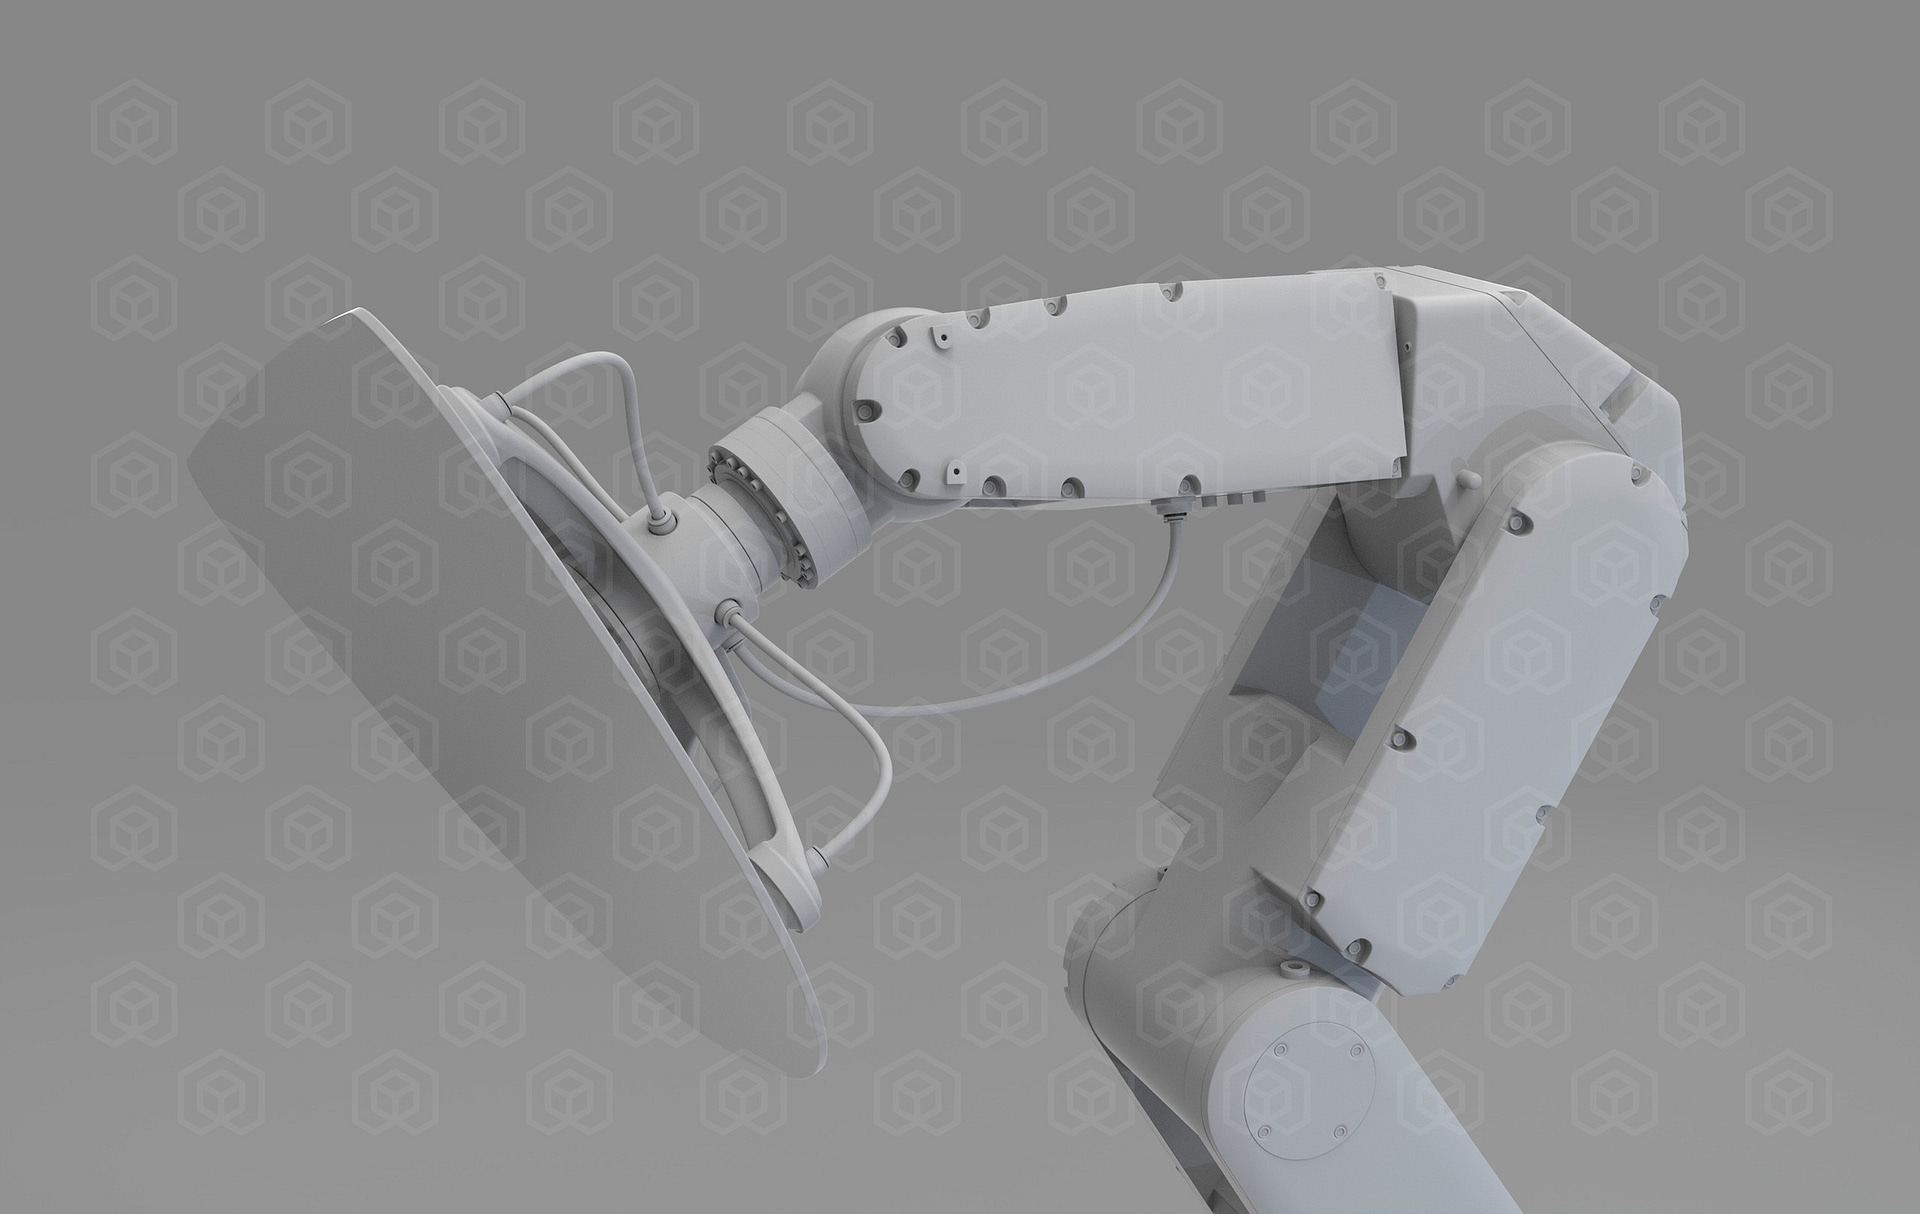 Industrial Arm Robot